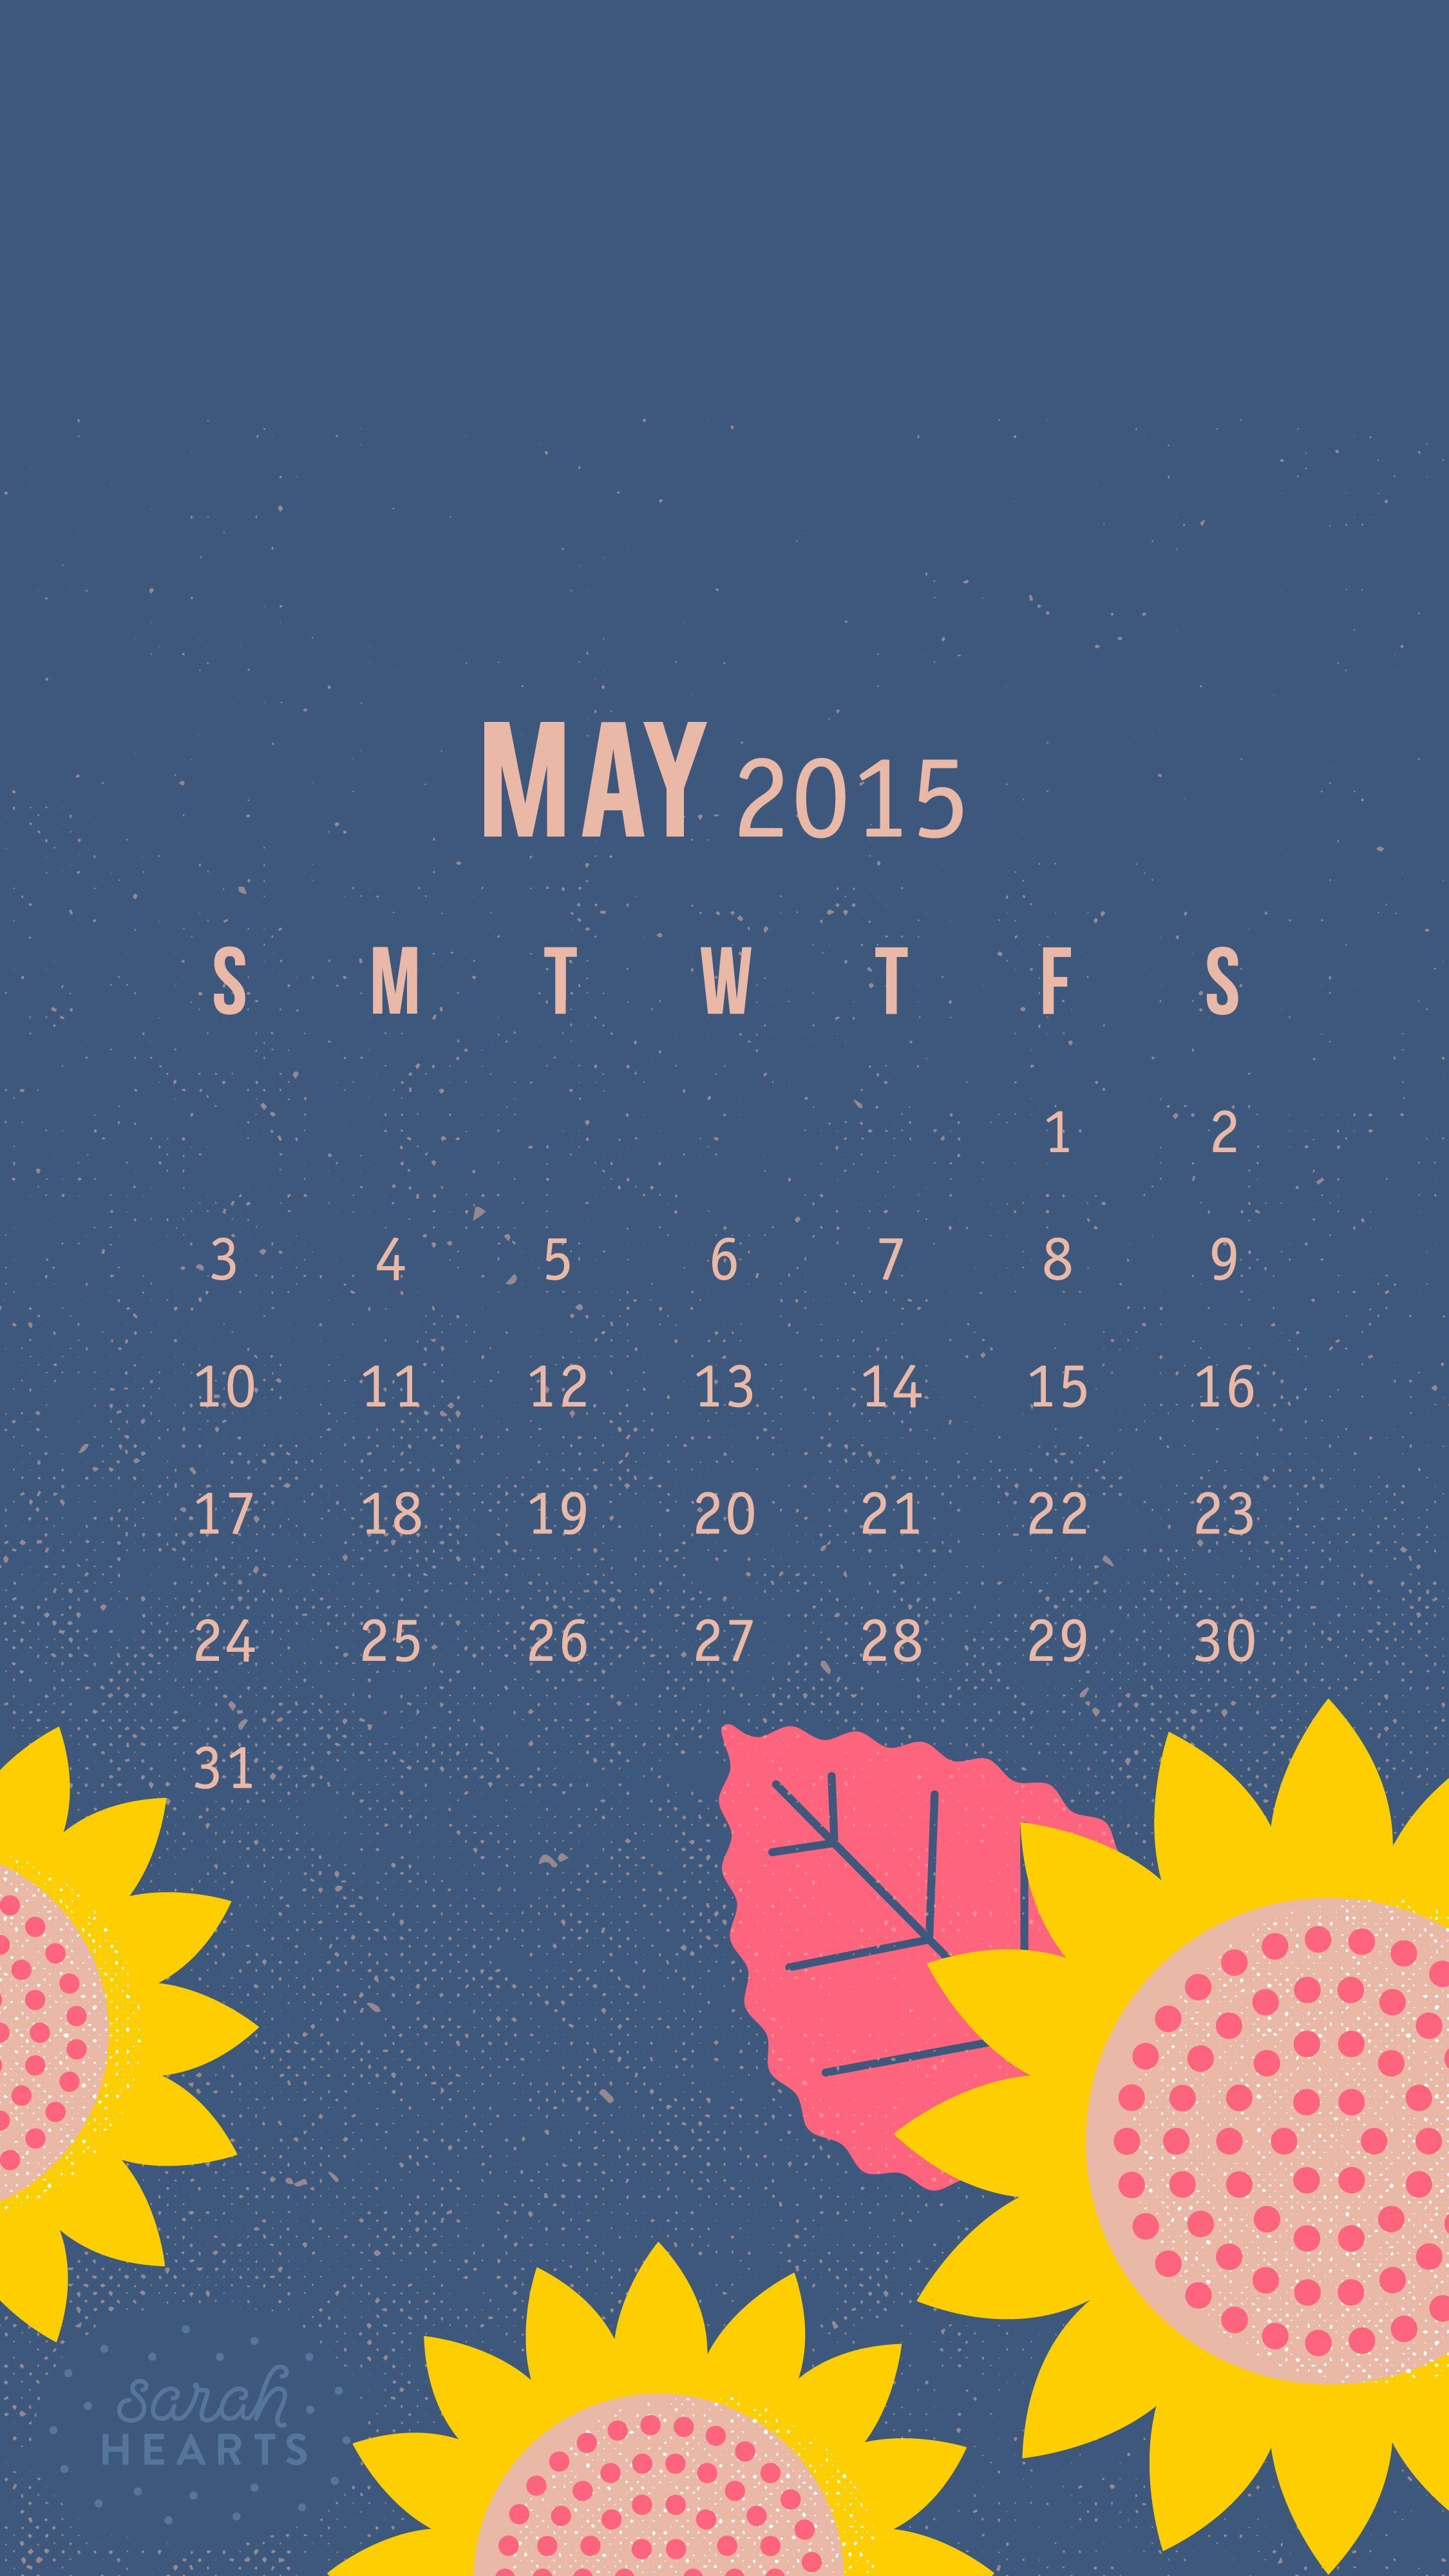 May 2015 Calendar Wallpaper - Sarah Hearts